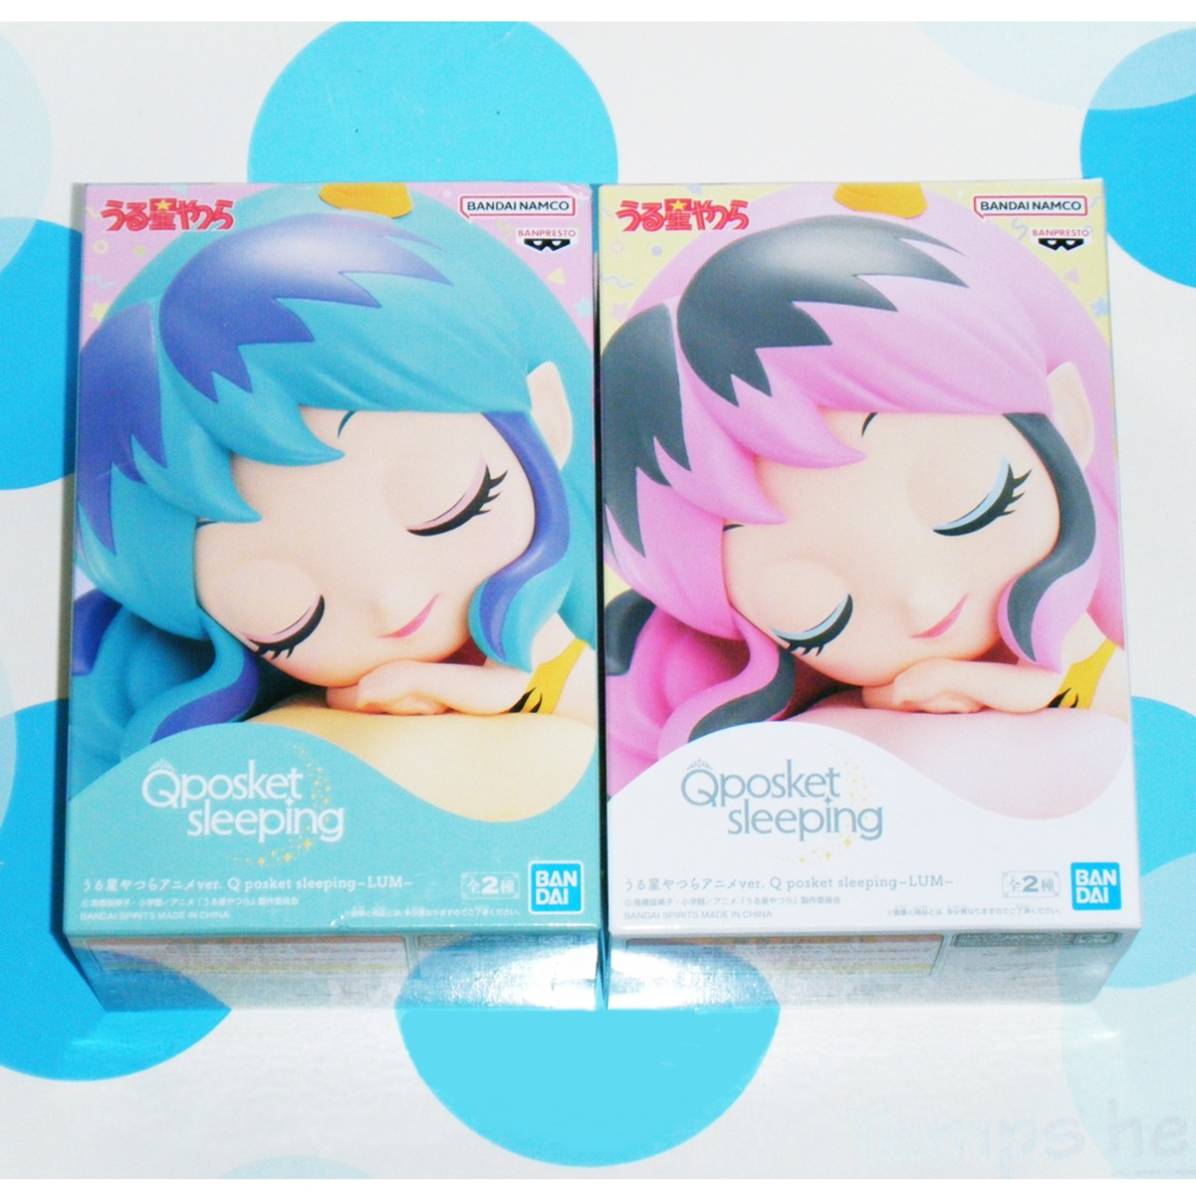  unused goods * Urusei Yatsura anime ver. Qposket sleeping LUM Ram figure color 2 color set Q posket* not for sale 